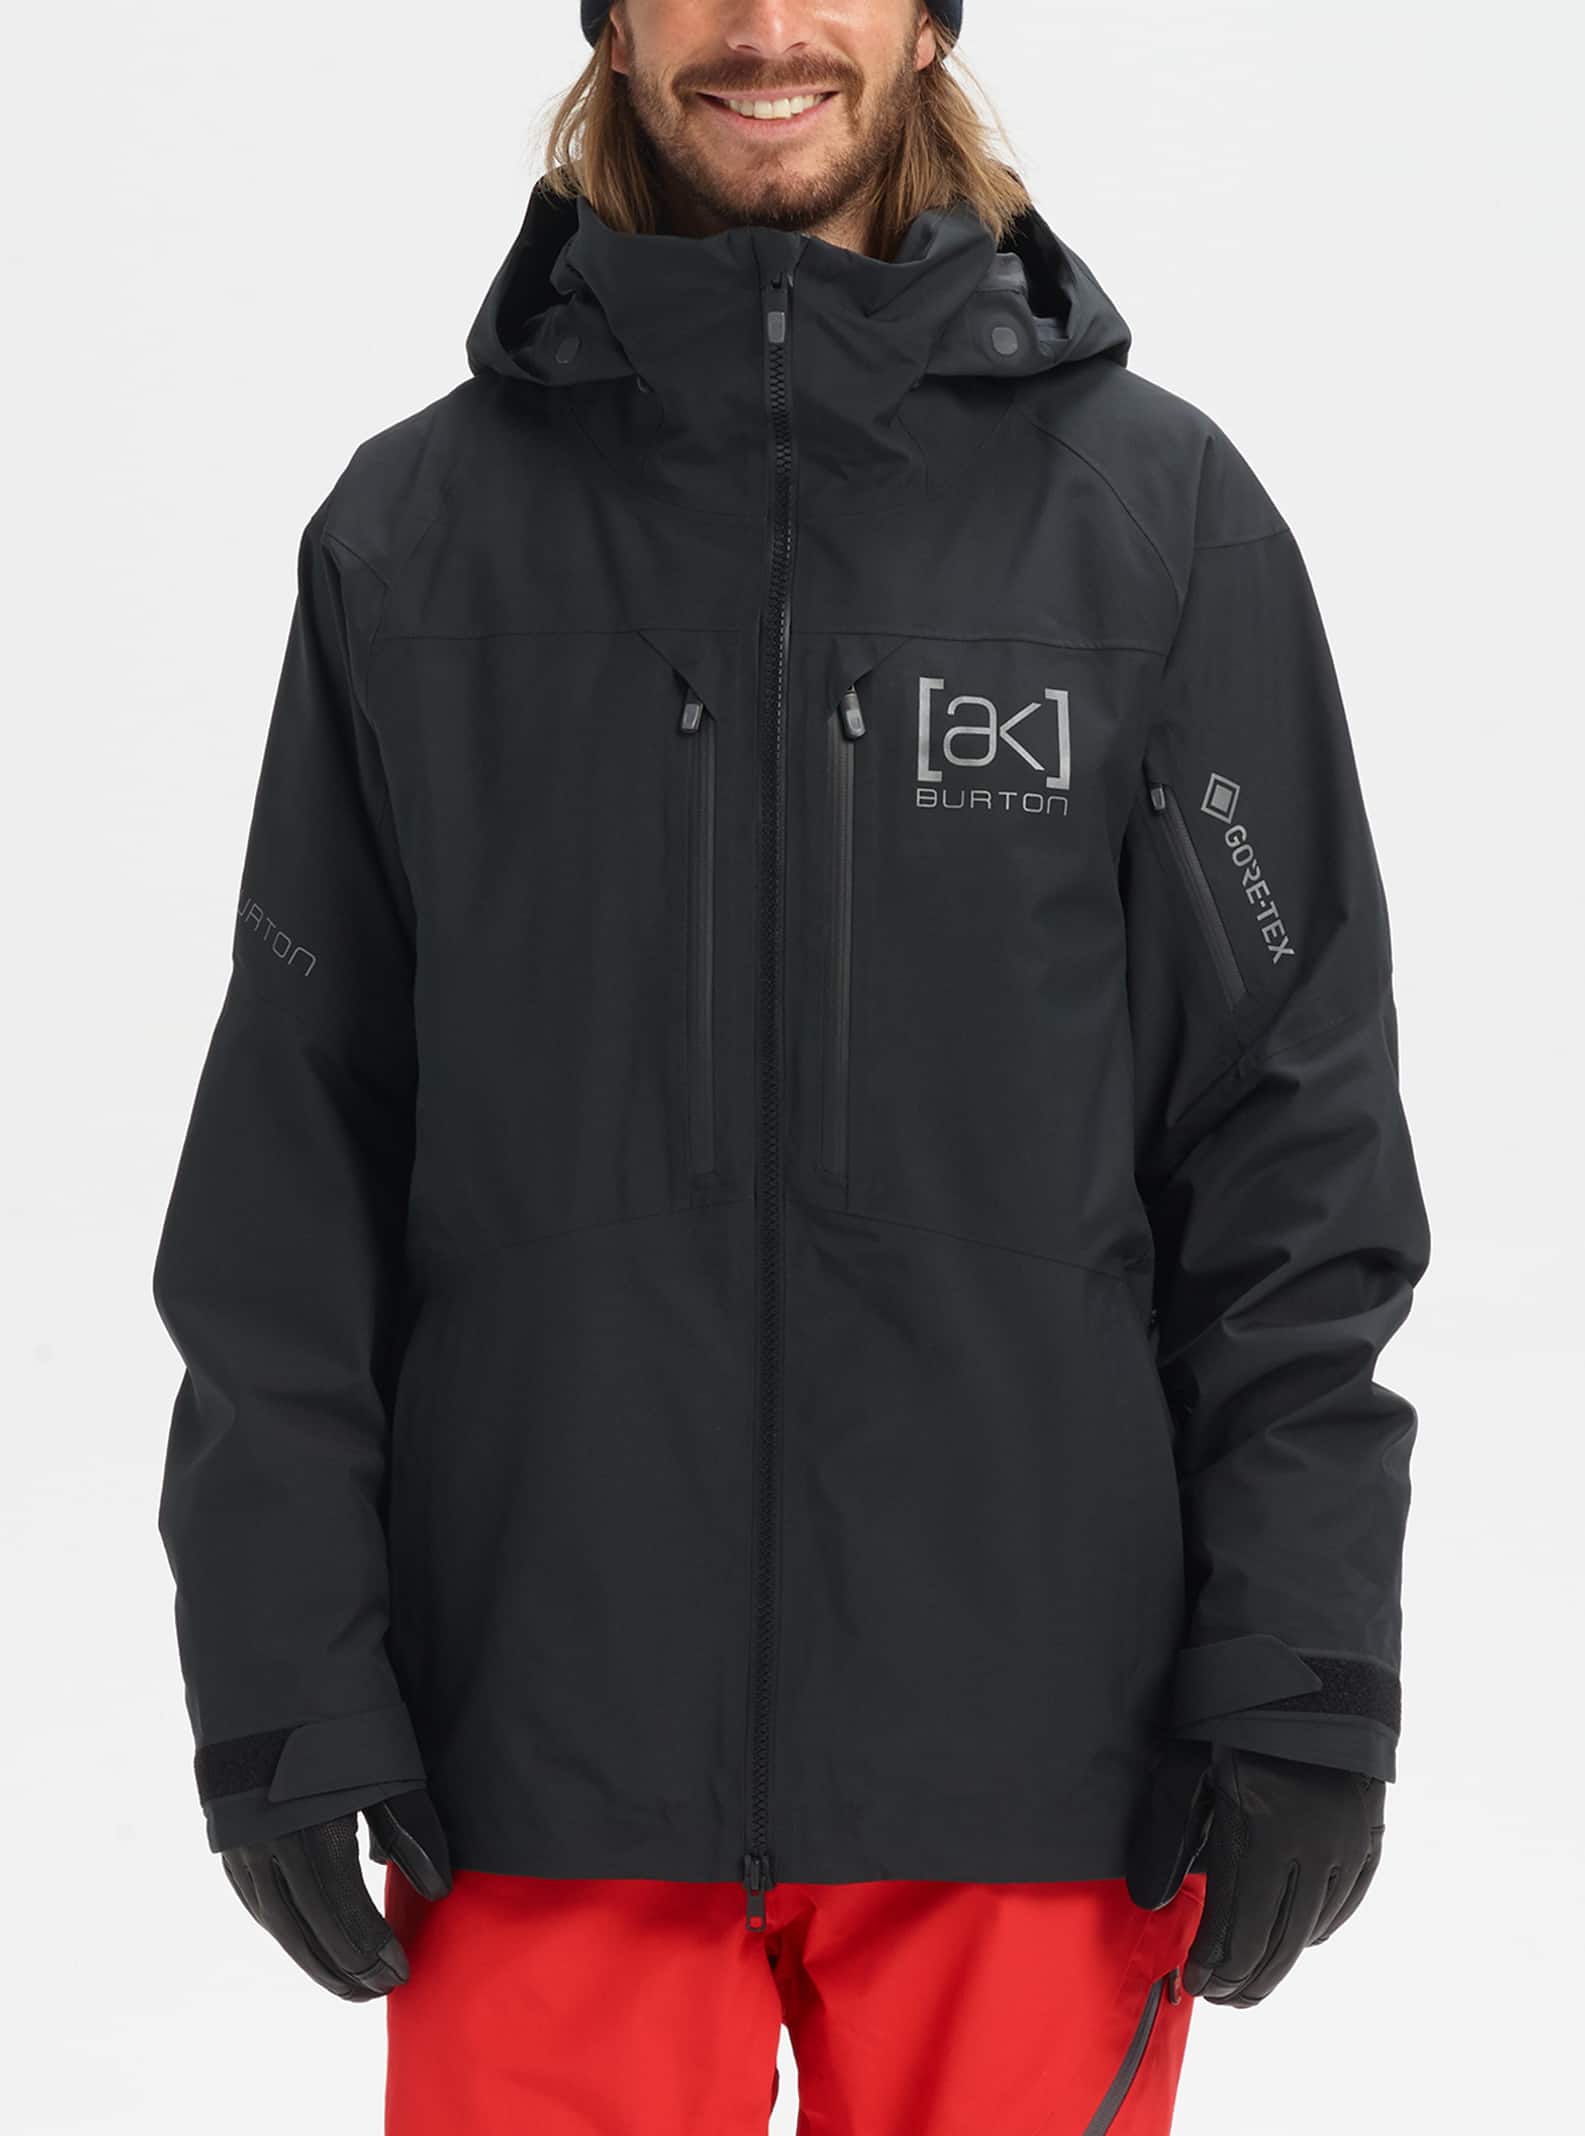 Burton Black Snowboard Jacket Discount, 53% OFF | barcelona-ipeg.eu